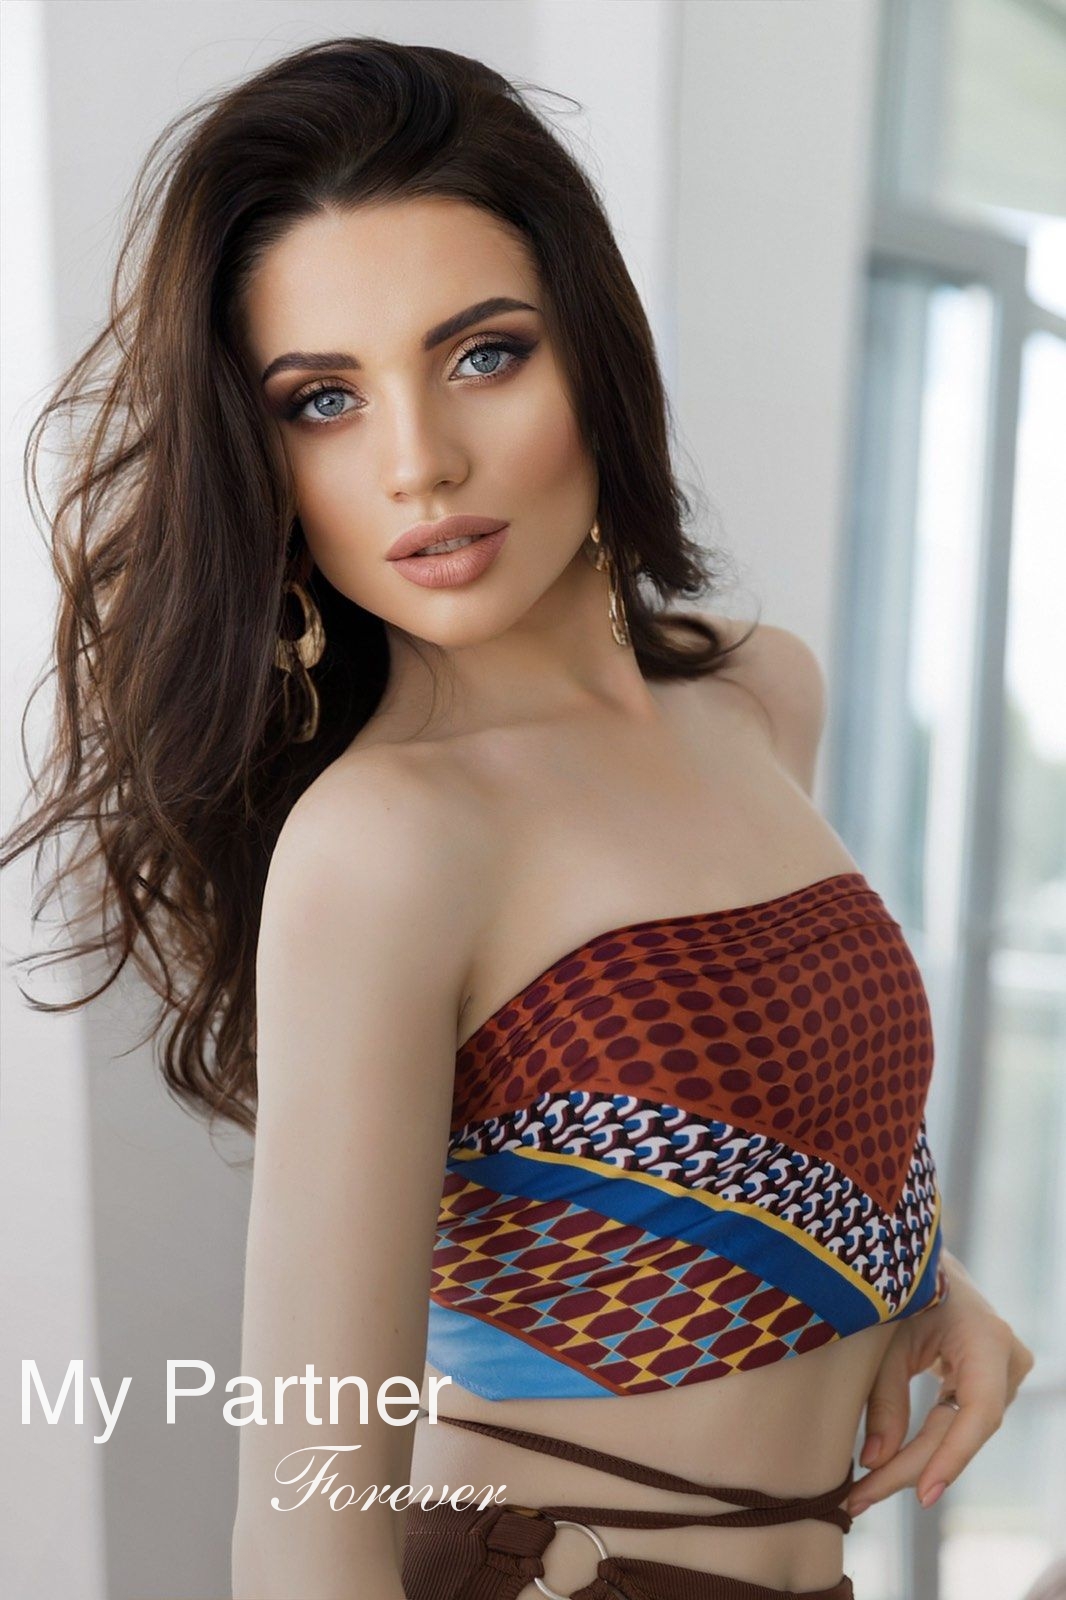 Dating Site to Meet Stunning Ukrainian Girl Marina from Kiev, Ukraine